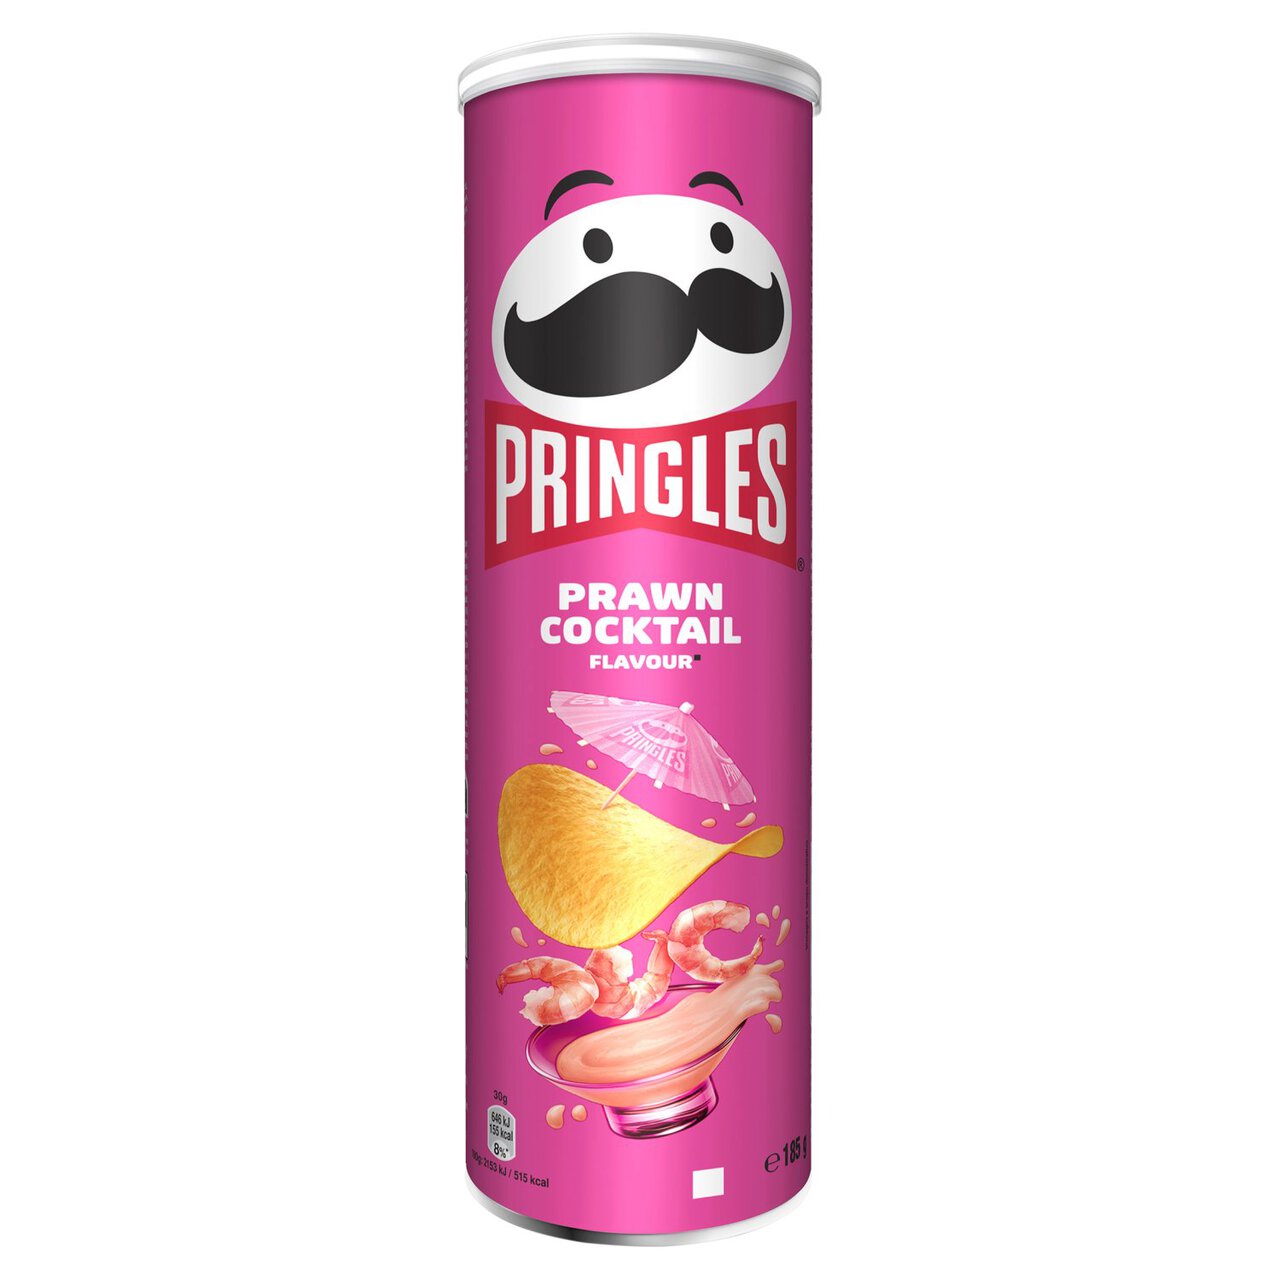 Pringles Prawn Cocktail Flavour Sharing Crisps 185g